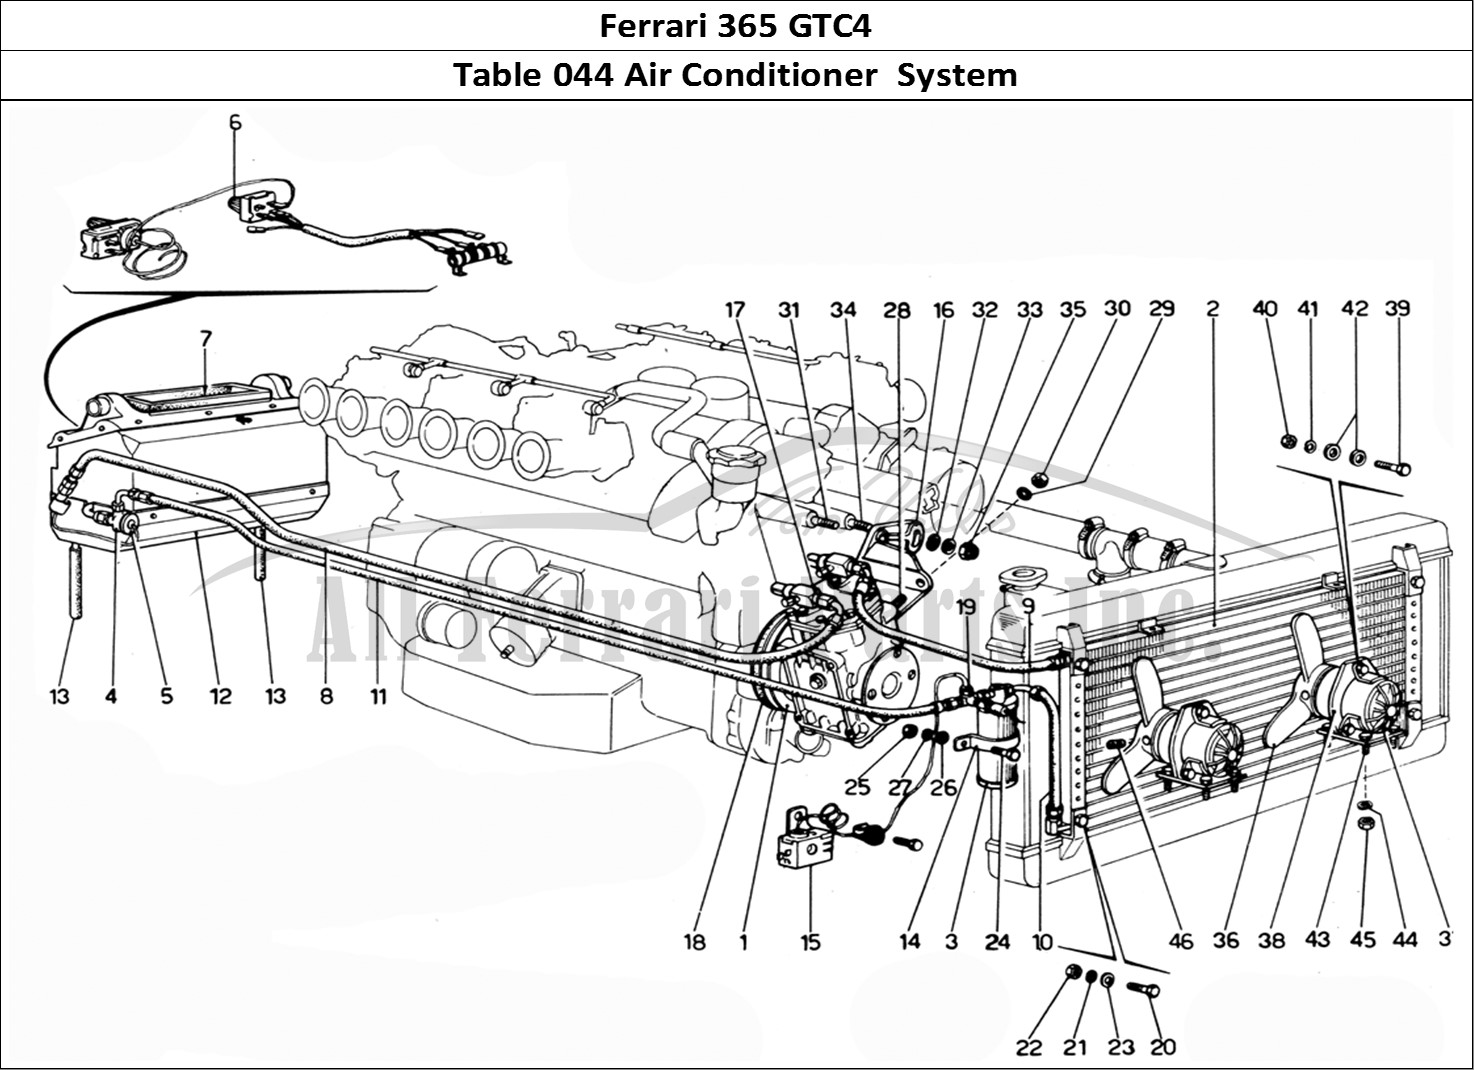 Ferrari Parts Ferrari 365 GTC4 (Mechanical) Page 044 Air condition system